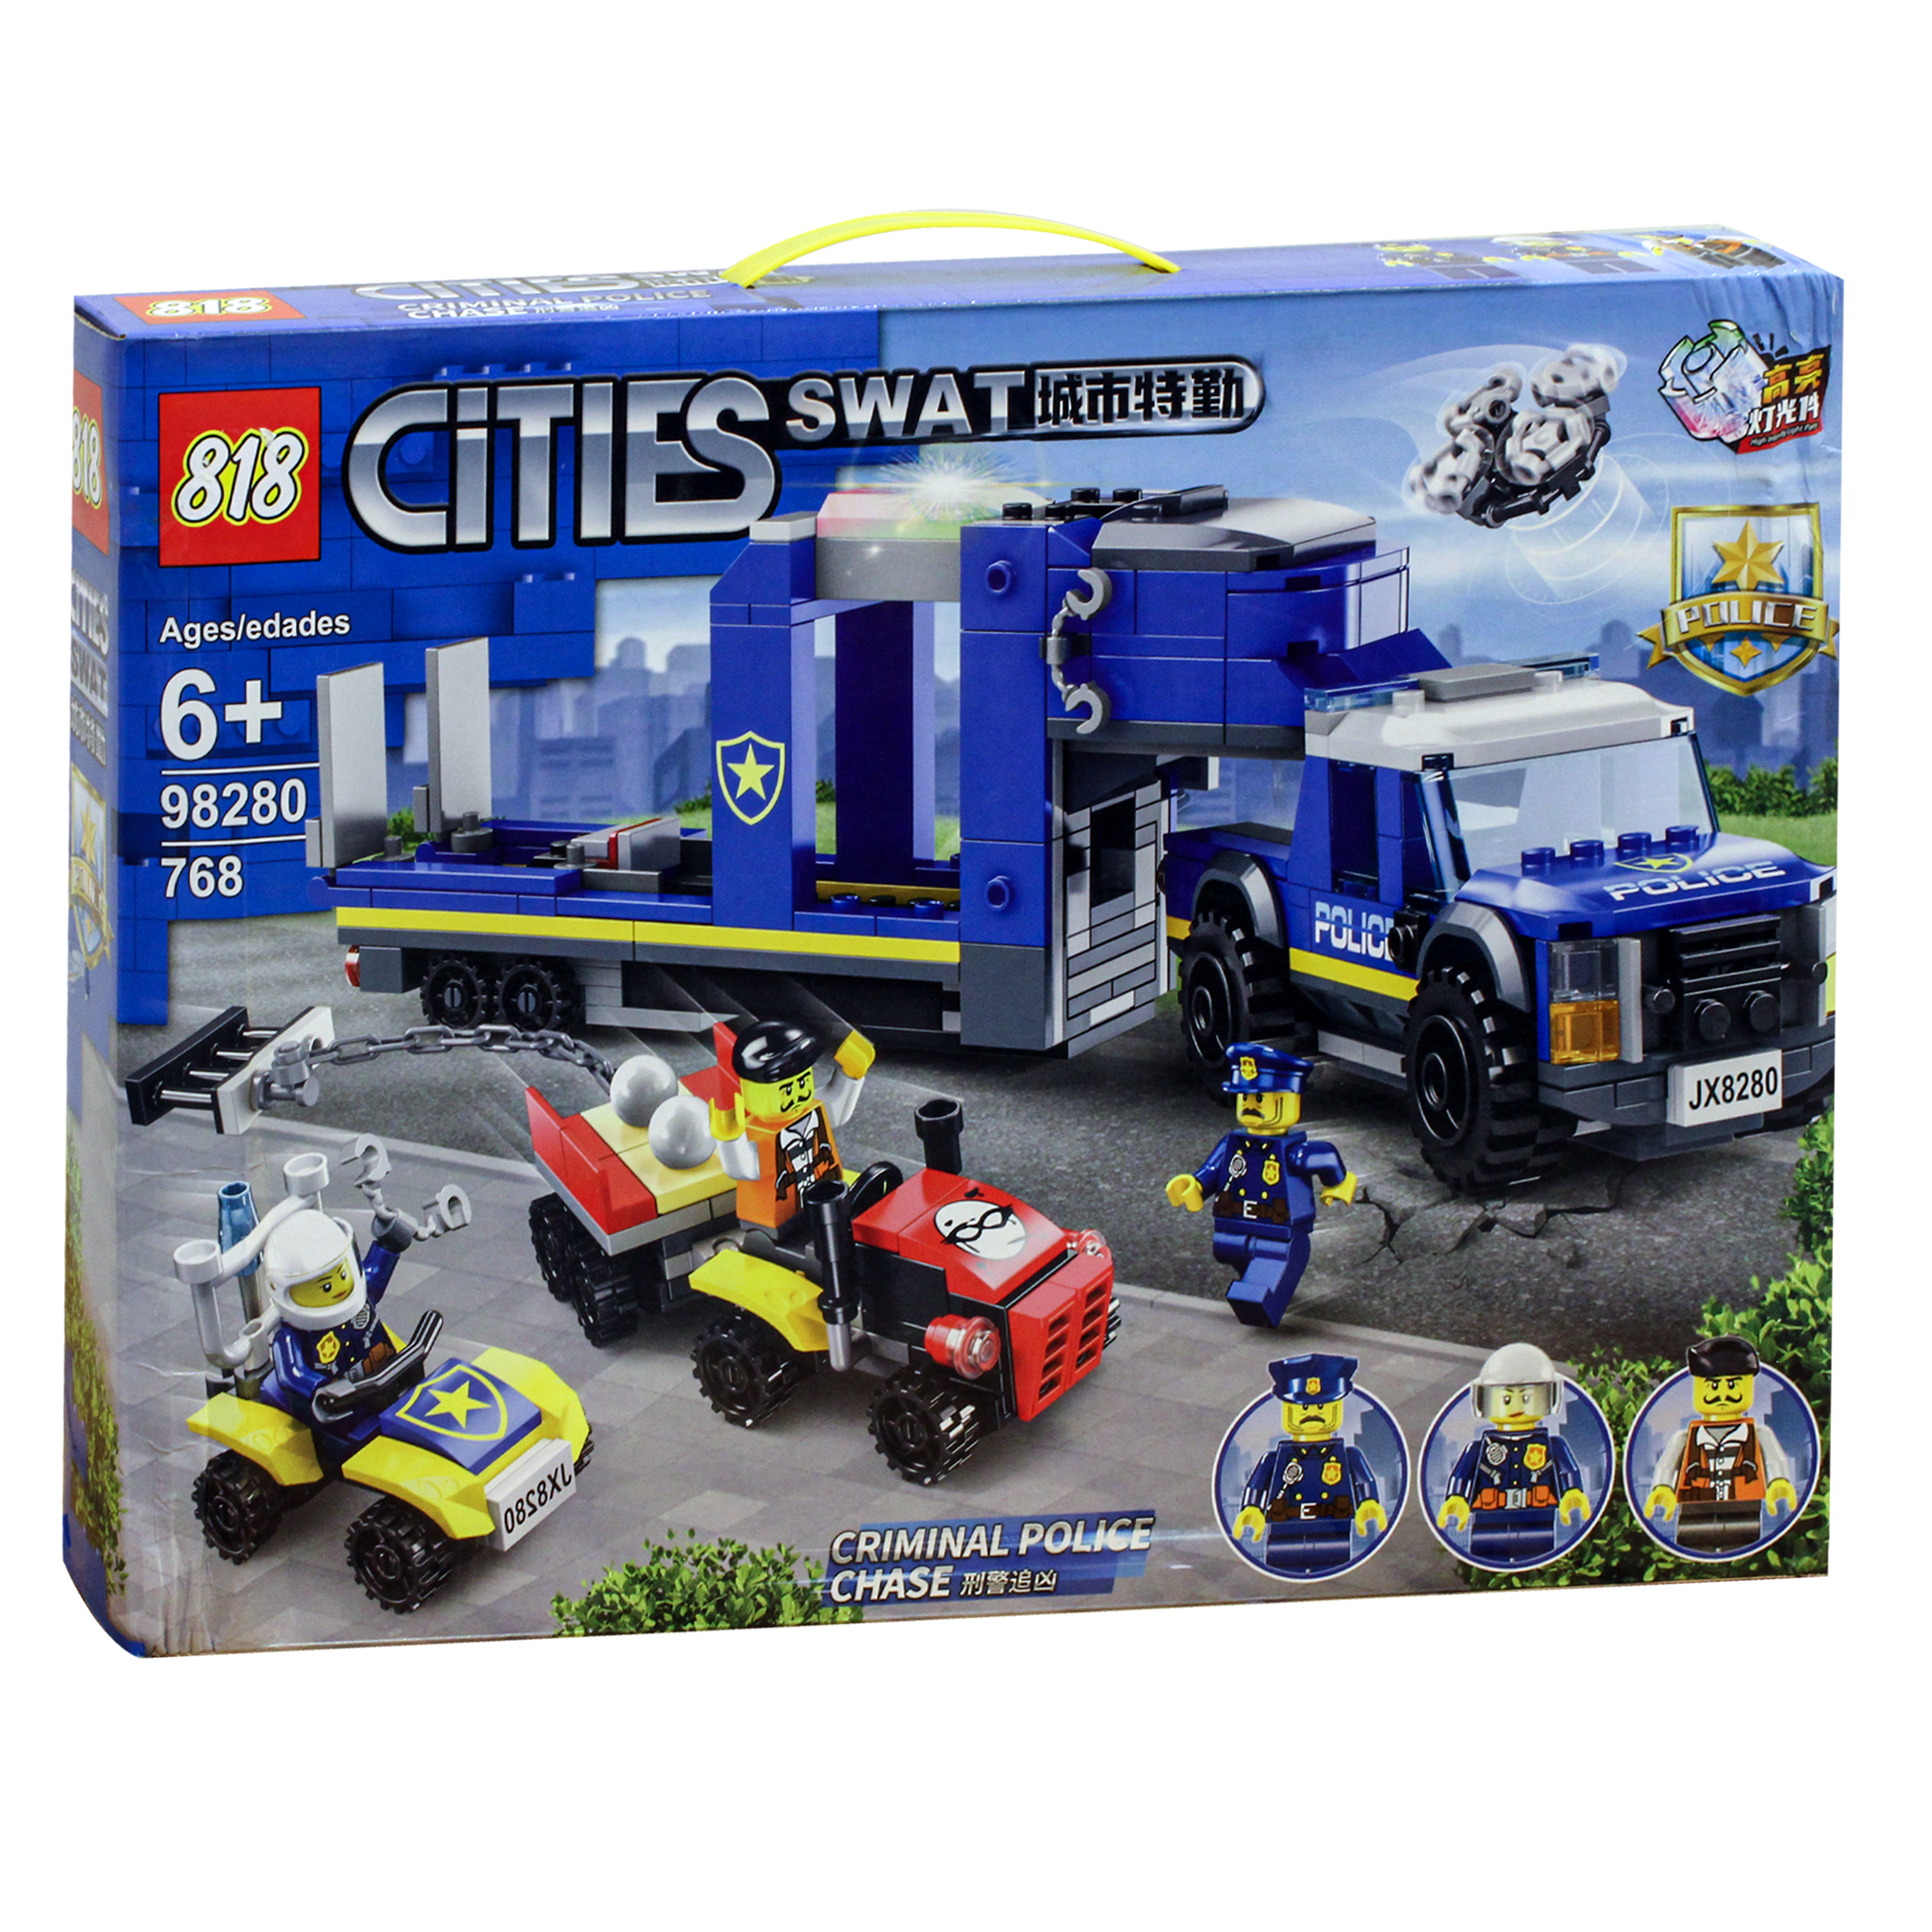 Lego Cities Swat 98280 puzzle - 768 Pieces